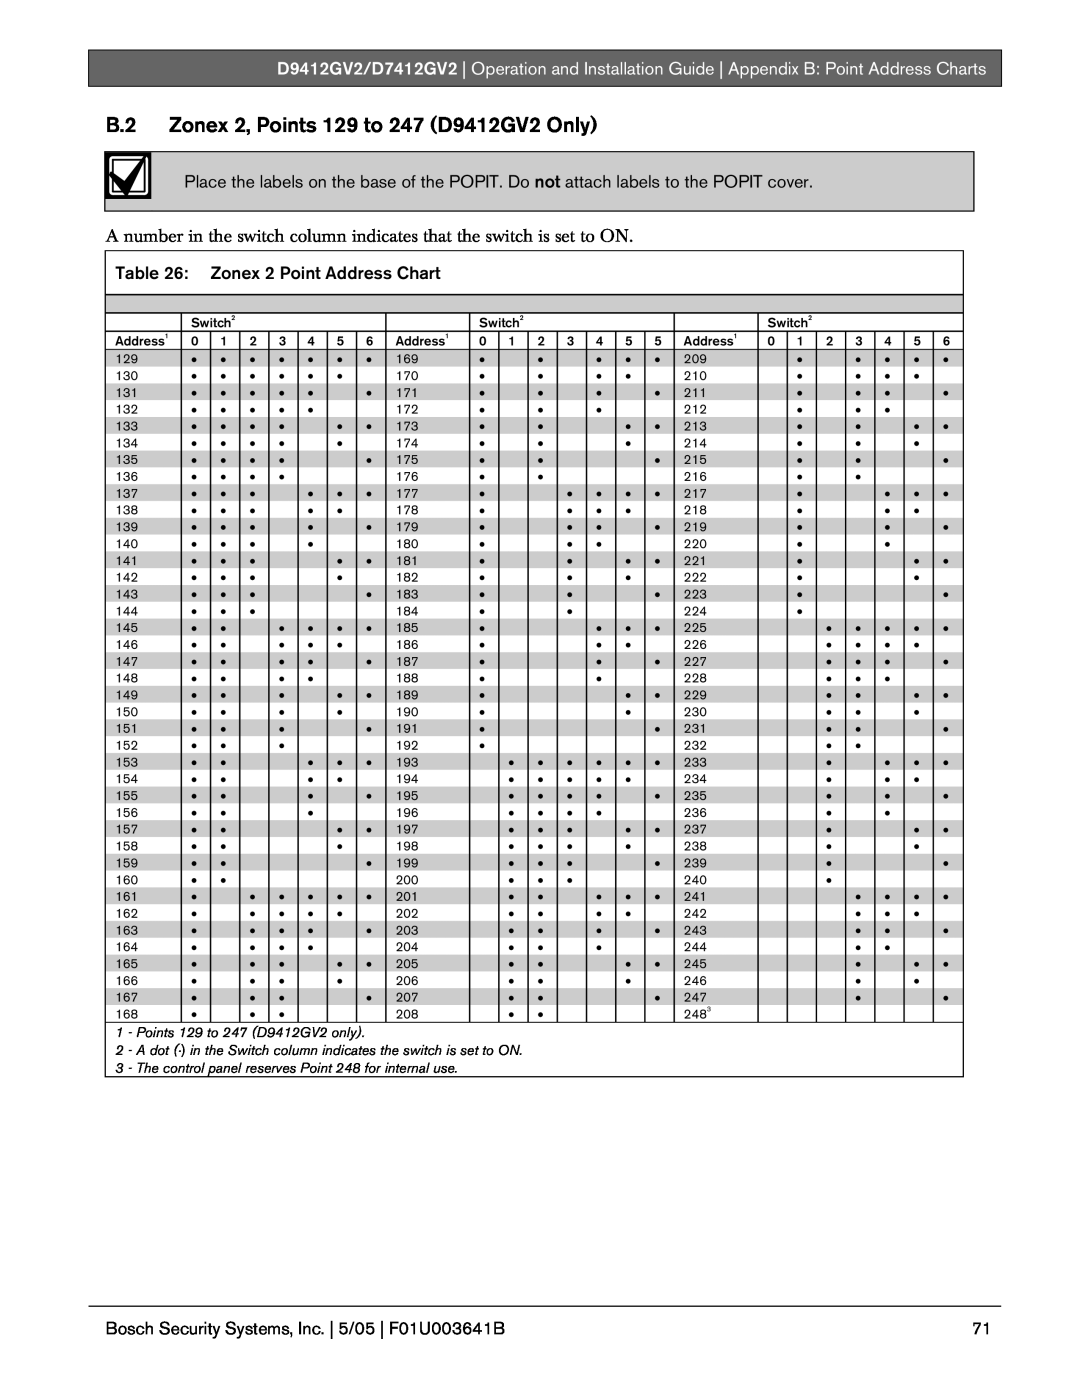 Bosch Appliances manual B.2 Zonex 2, Points 129 to 247 D9412GV2 Only, Zonex 2 Point Address Chart 